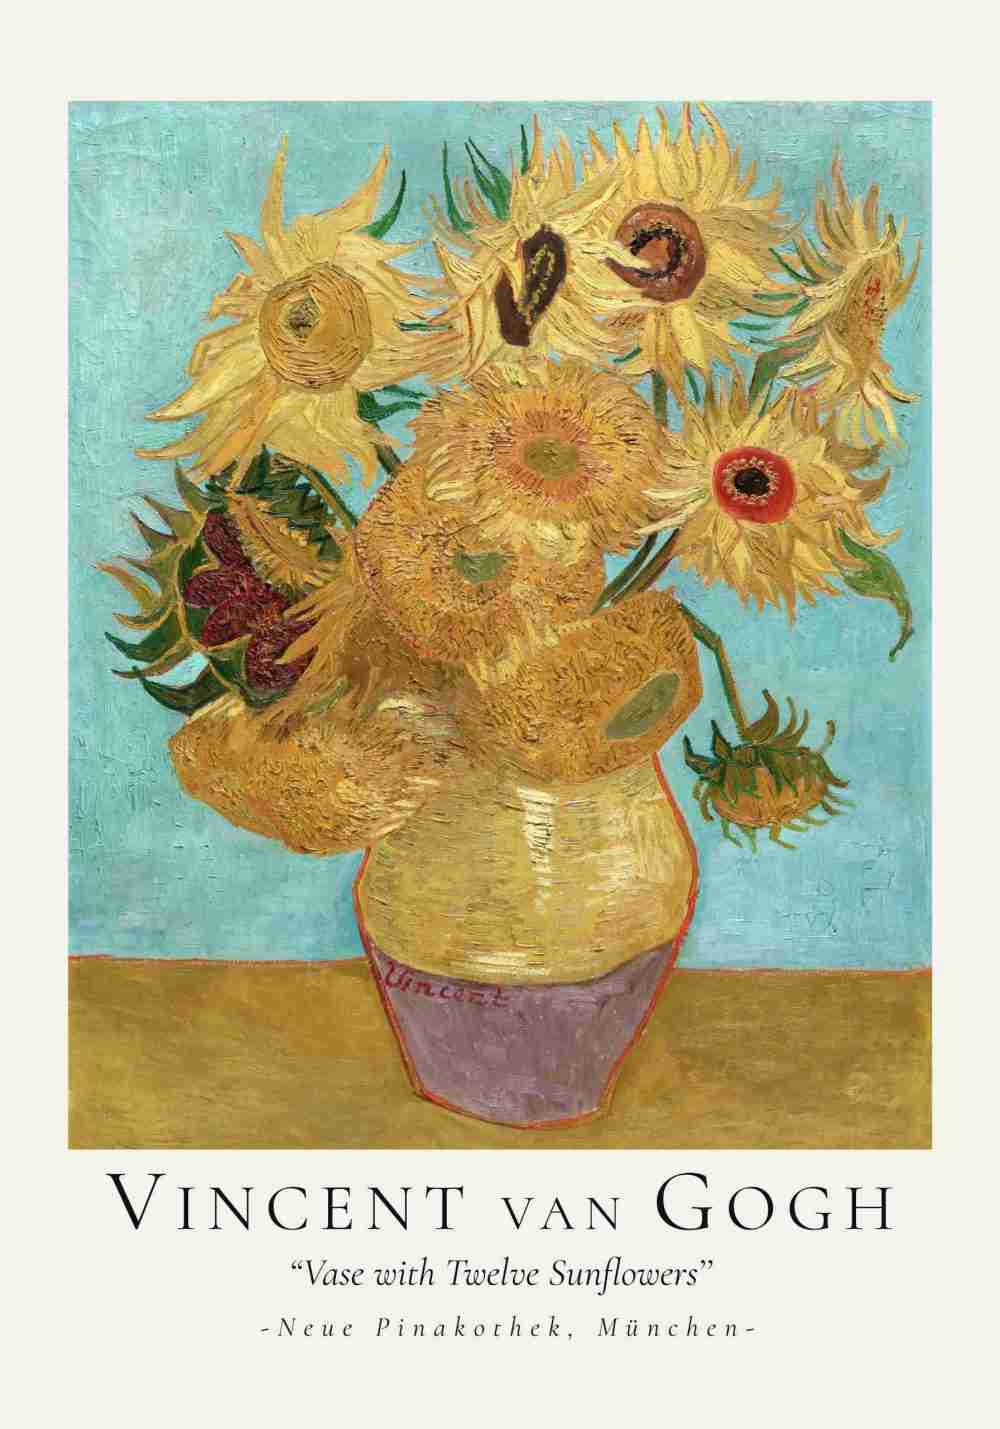 Vincent van Gogh Vas med Tolv Solrosor Poster